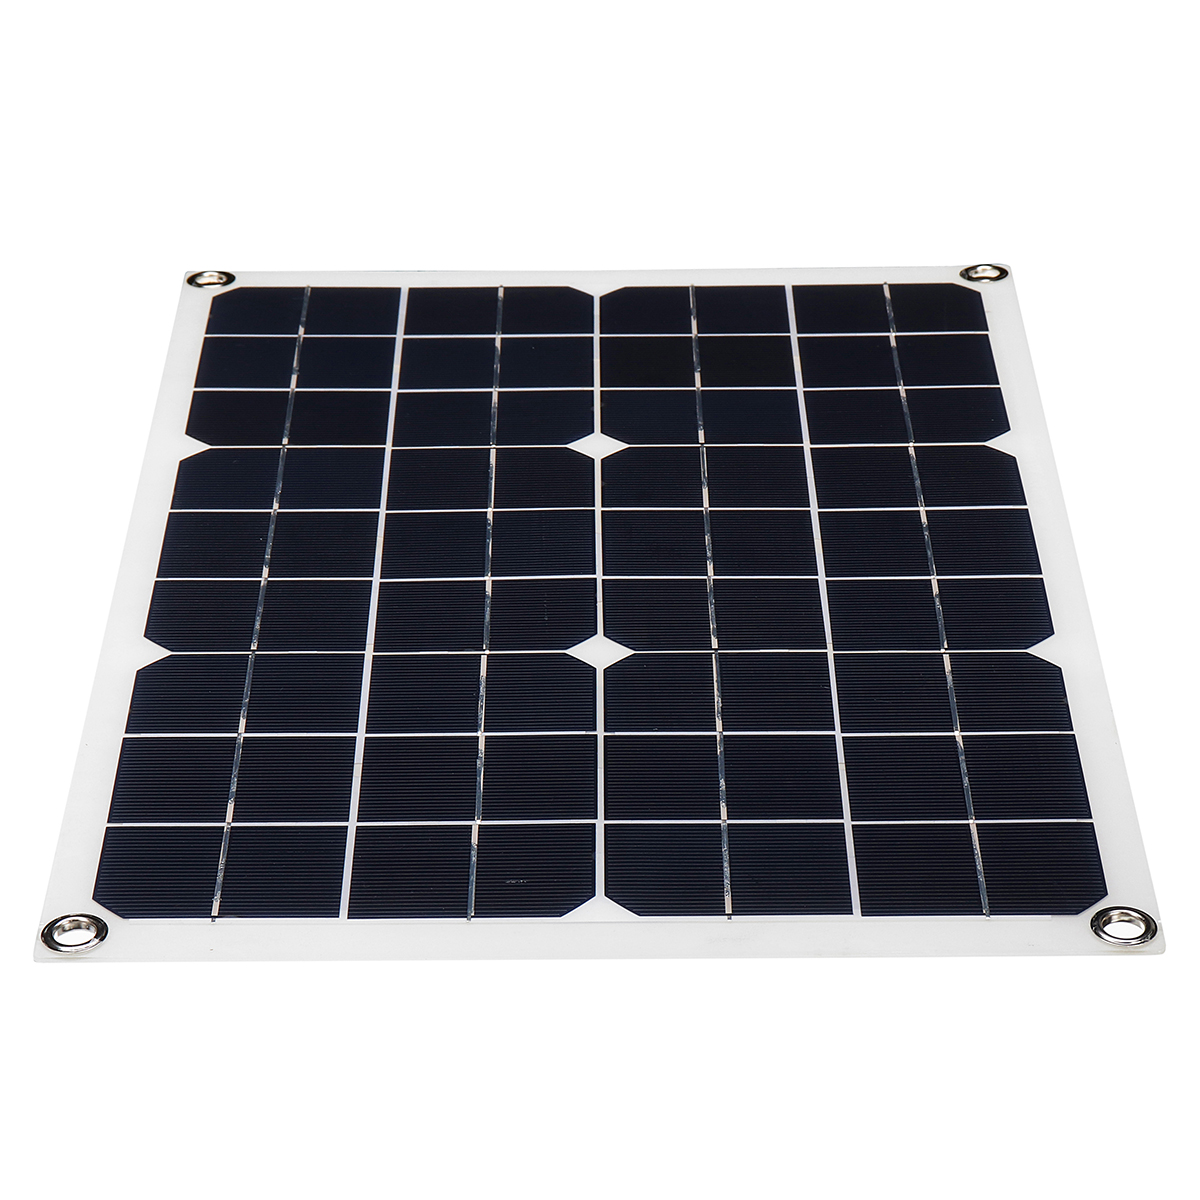 20W 430*280*2.5mm Monocrystalline Solar Panel with 18V DC Plug & 5V USB Output High Efficiency & Light Weight 30